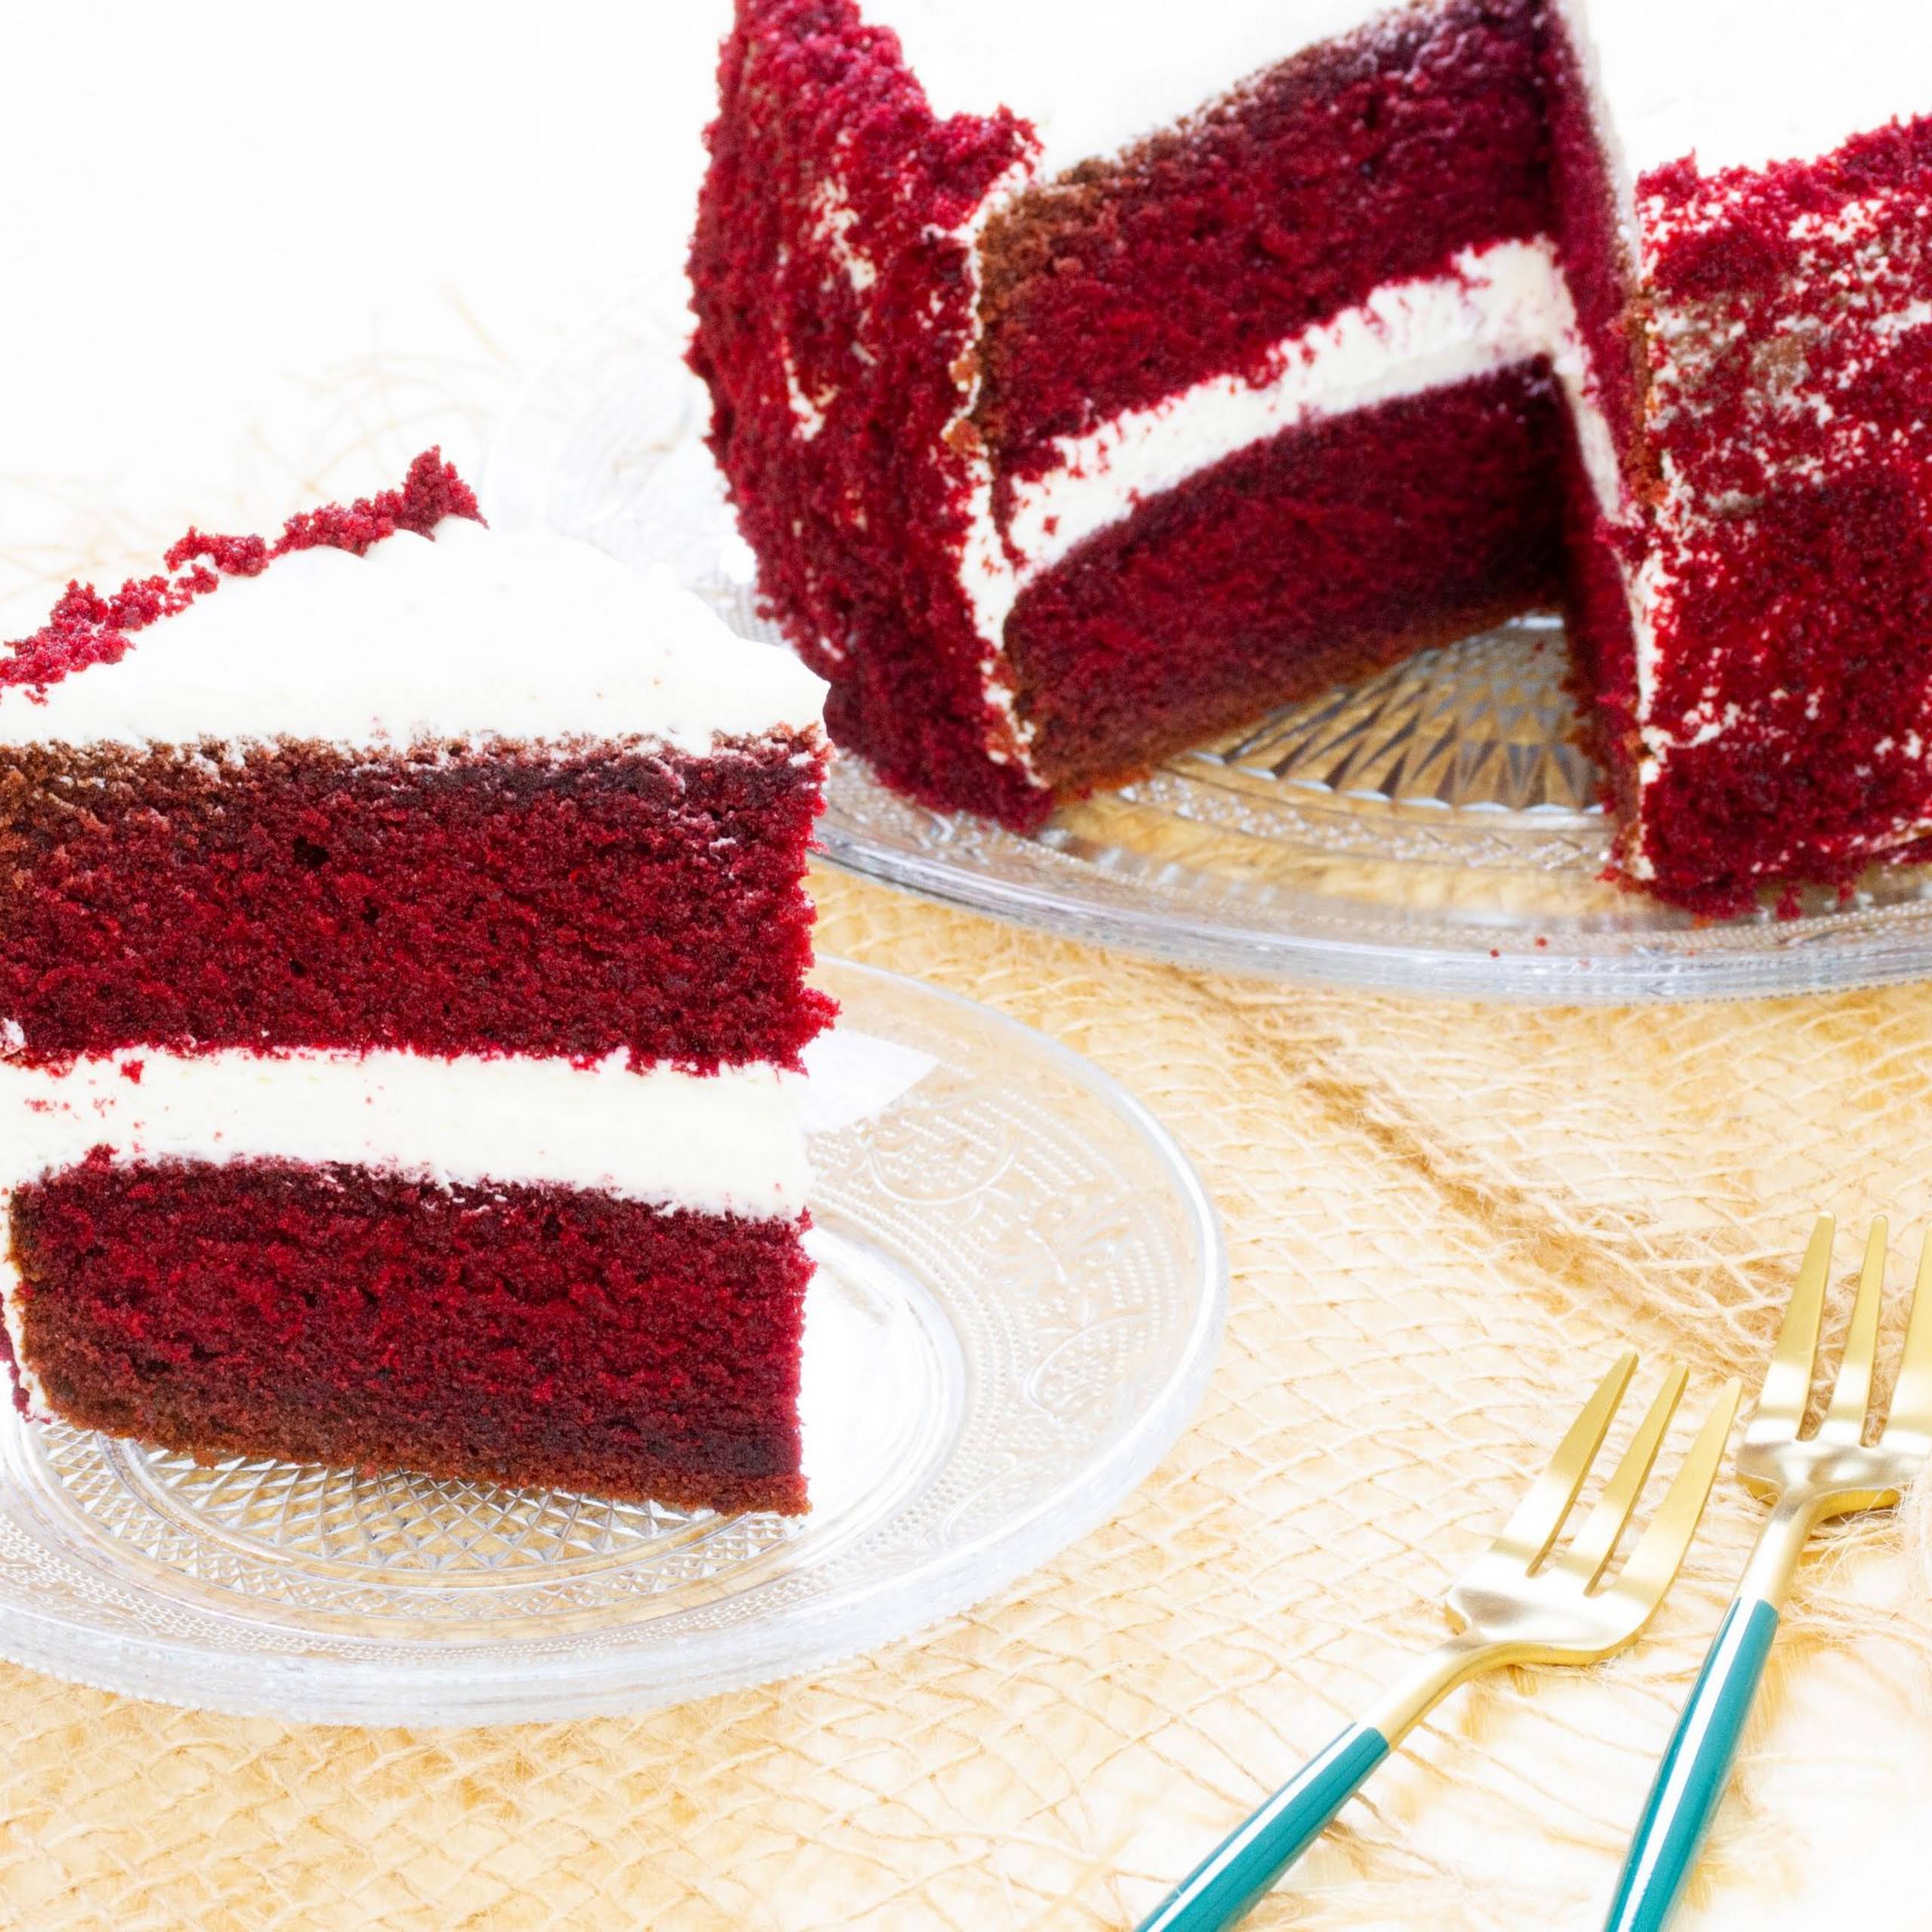 BEST Red Velvet Cake Recipe - Handle the Heat